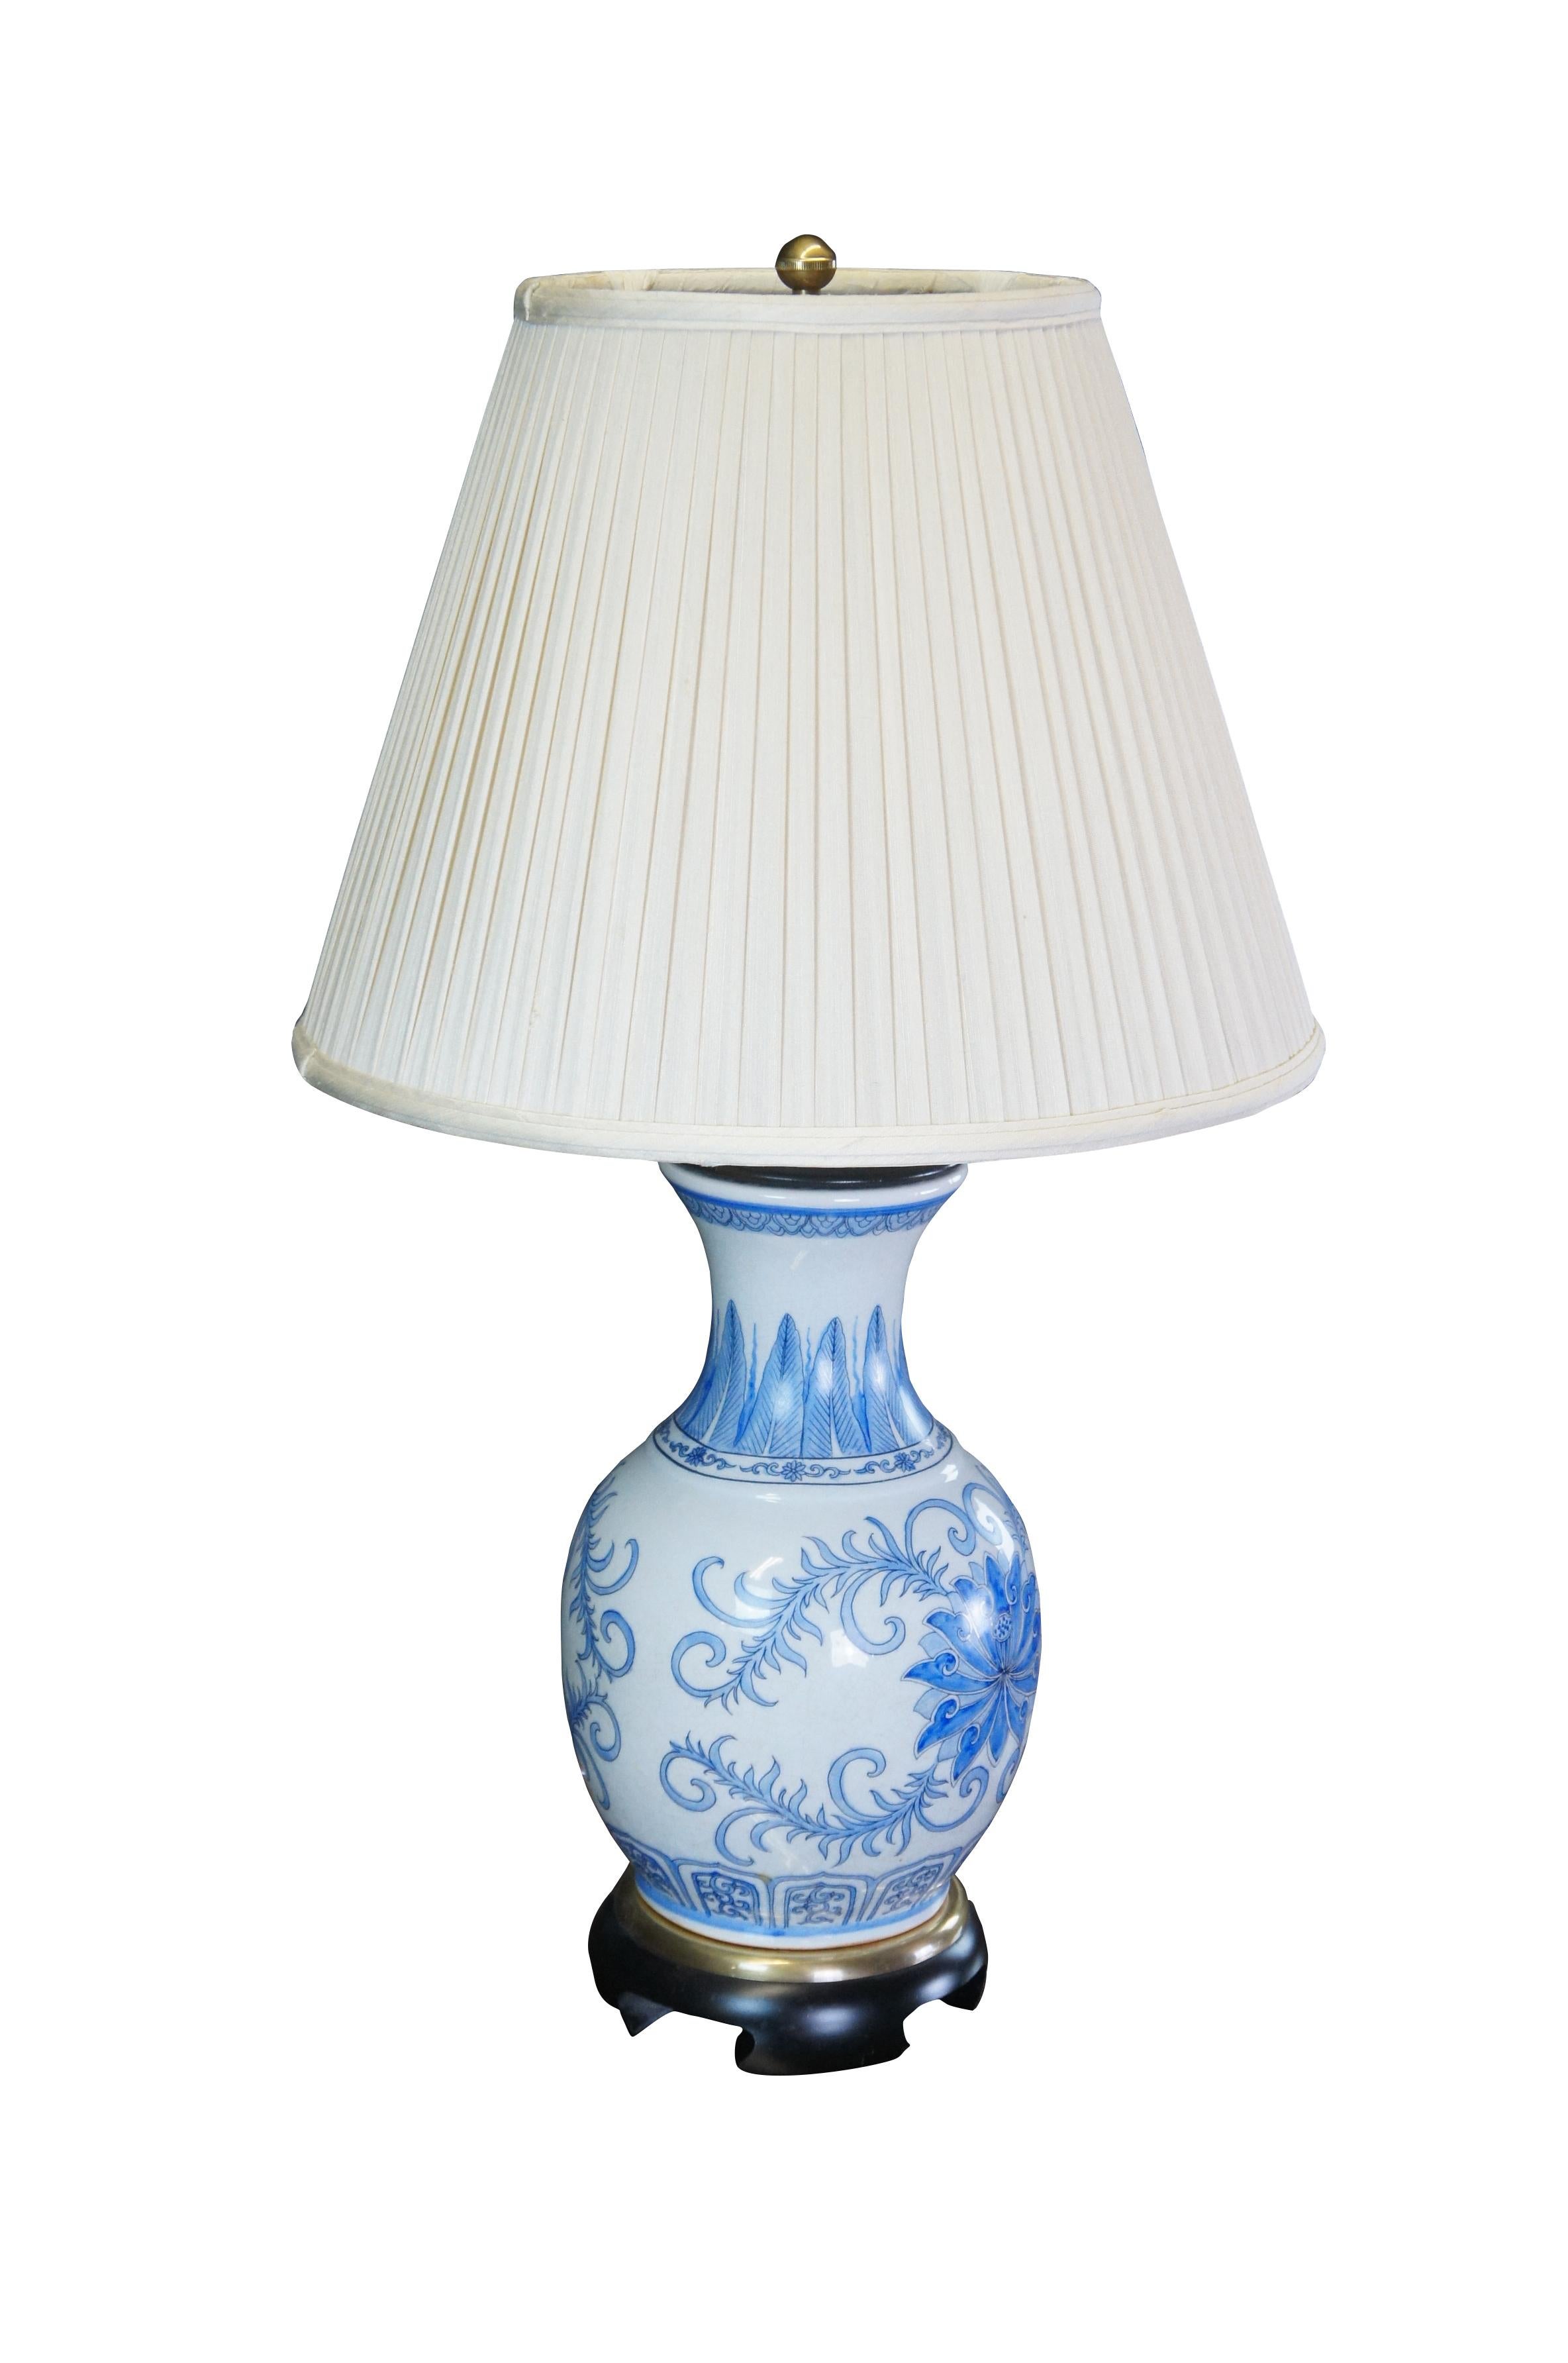 Chinoiserie Frederick Cooper Blue White Chinese Porcelain Mantel Vase Urn Ginger Jar Lamp For Sale